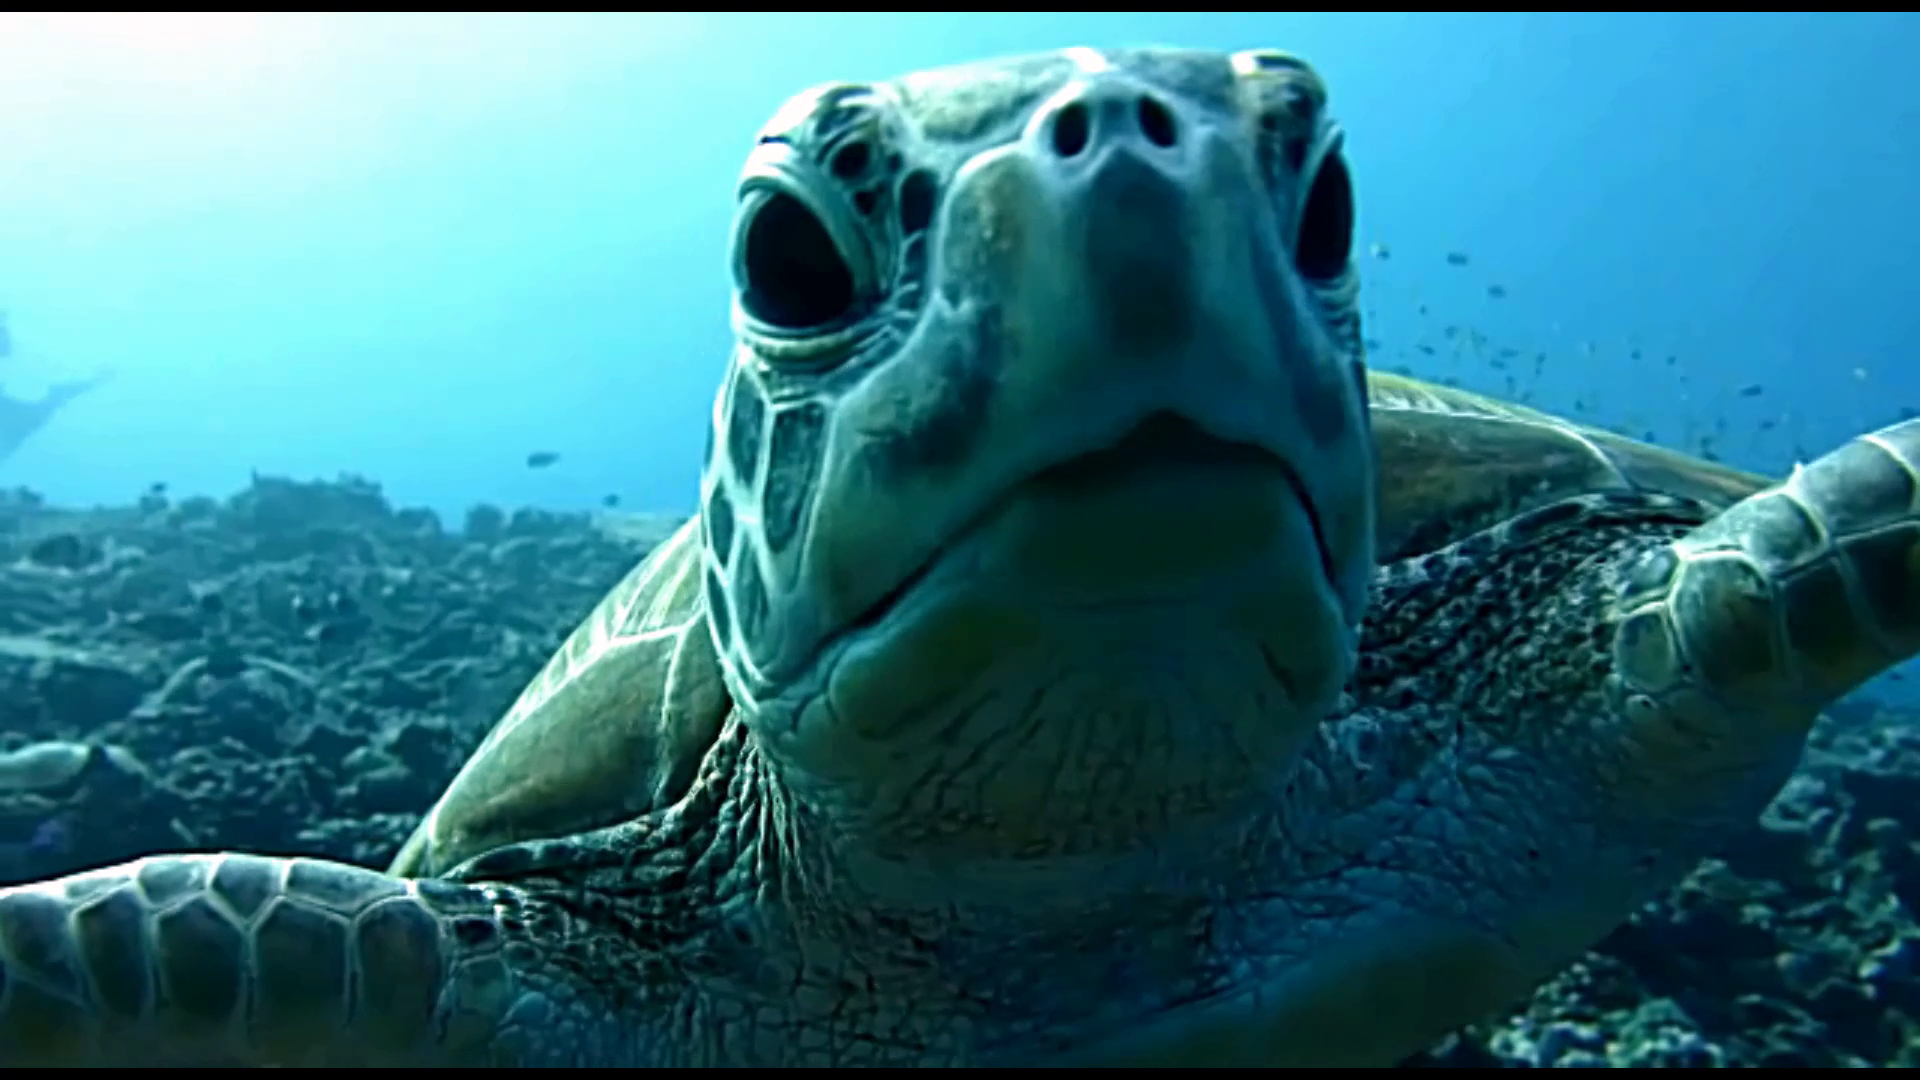 La Tartaruga marina Caretta caretta - The Loggerhead sea Turtle - intotheblue.it